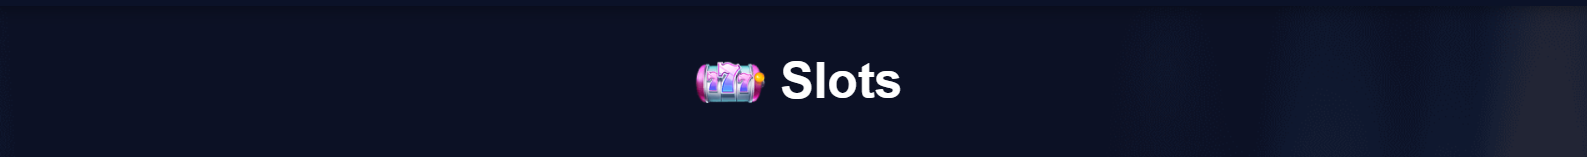 Slots_banner